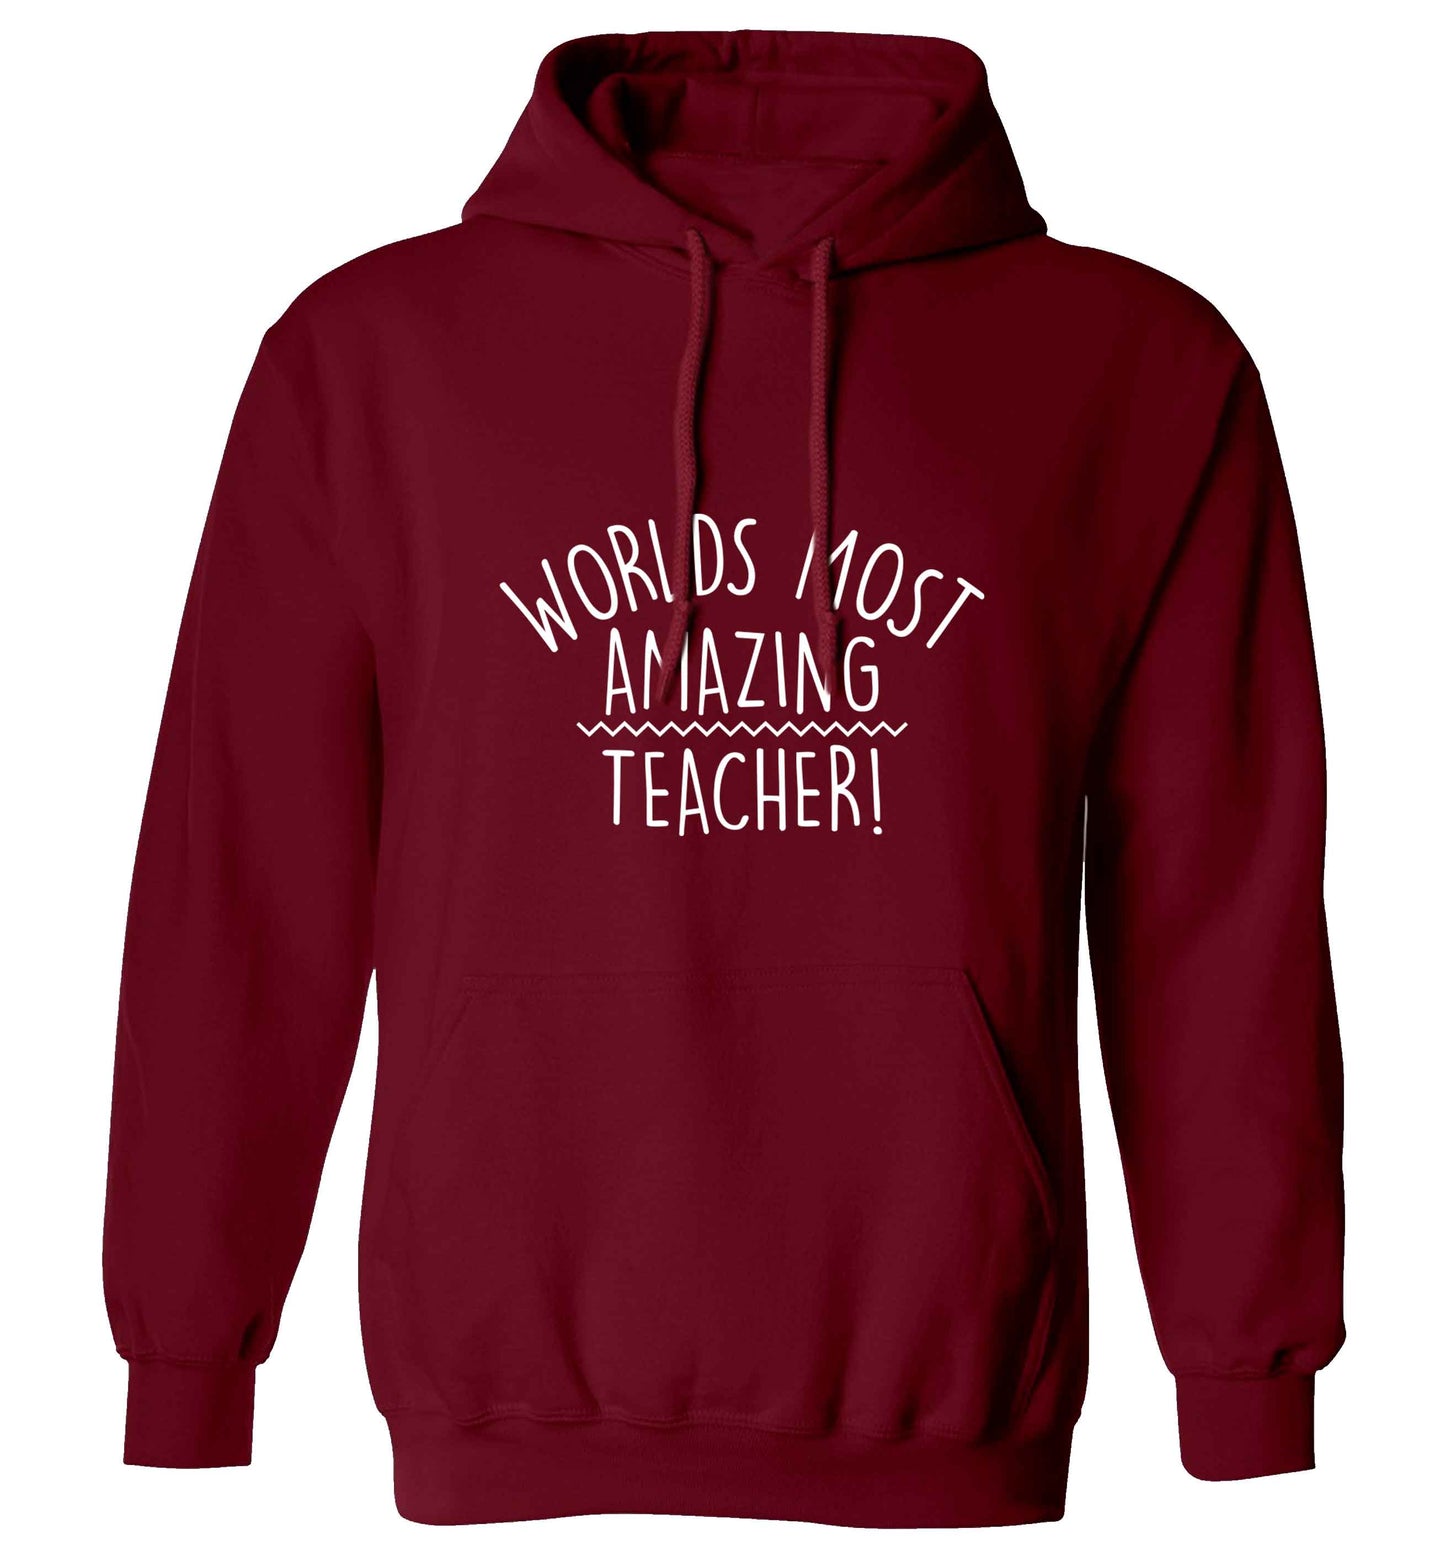 Worlds most amazing teacher adults unisex maroon hoodie 2XL